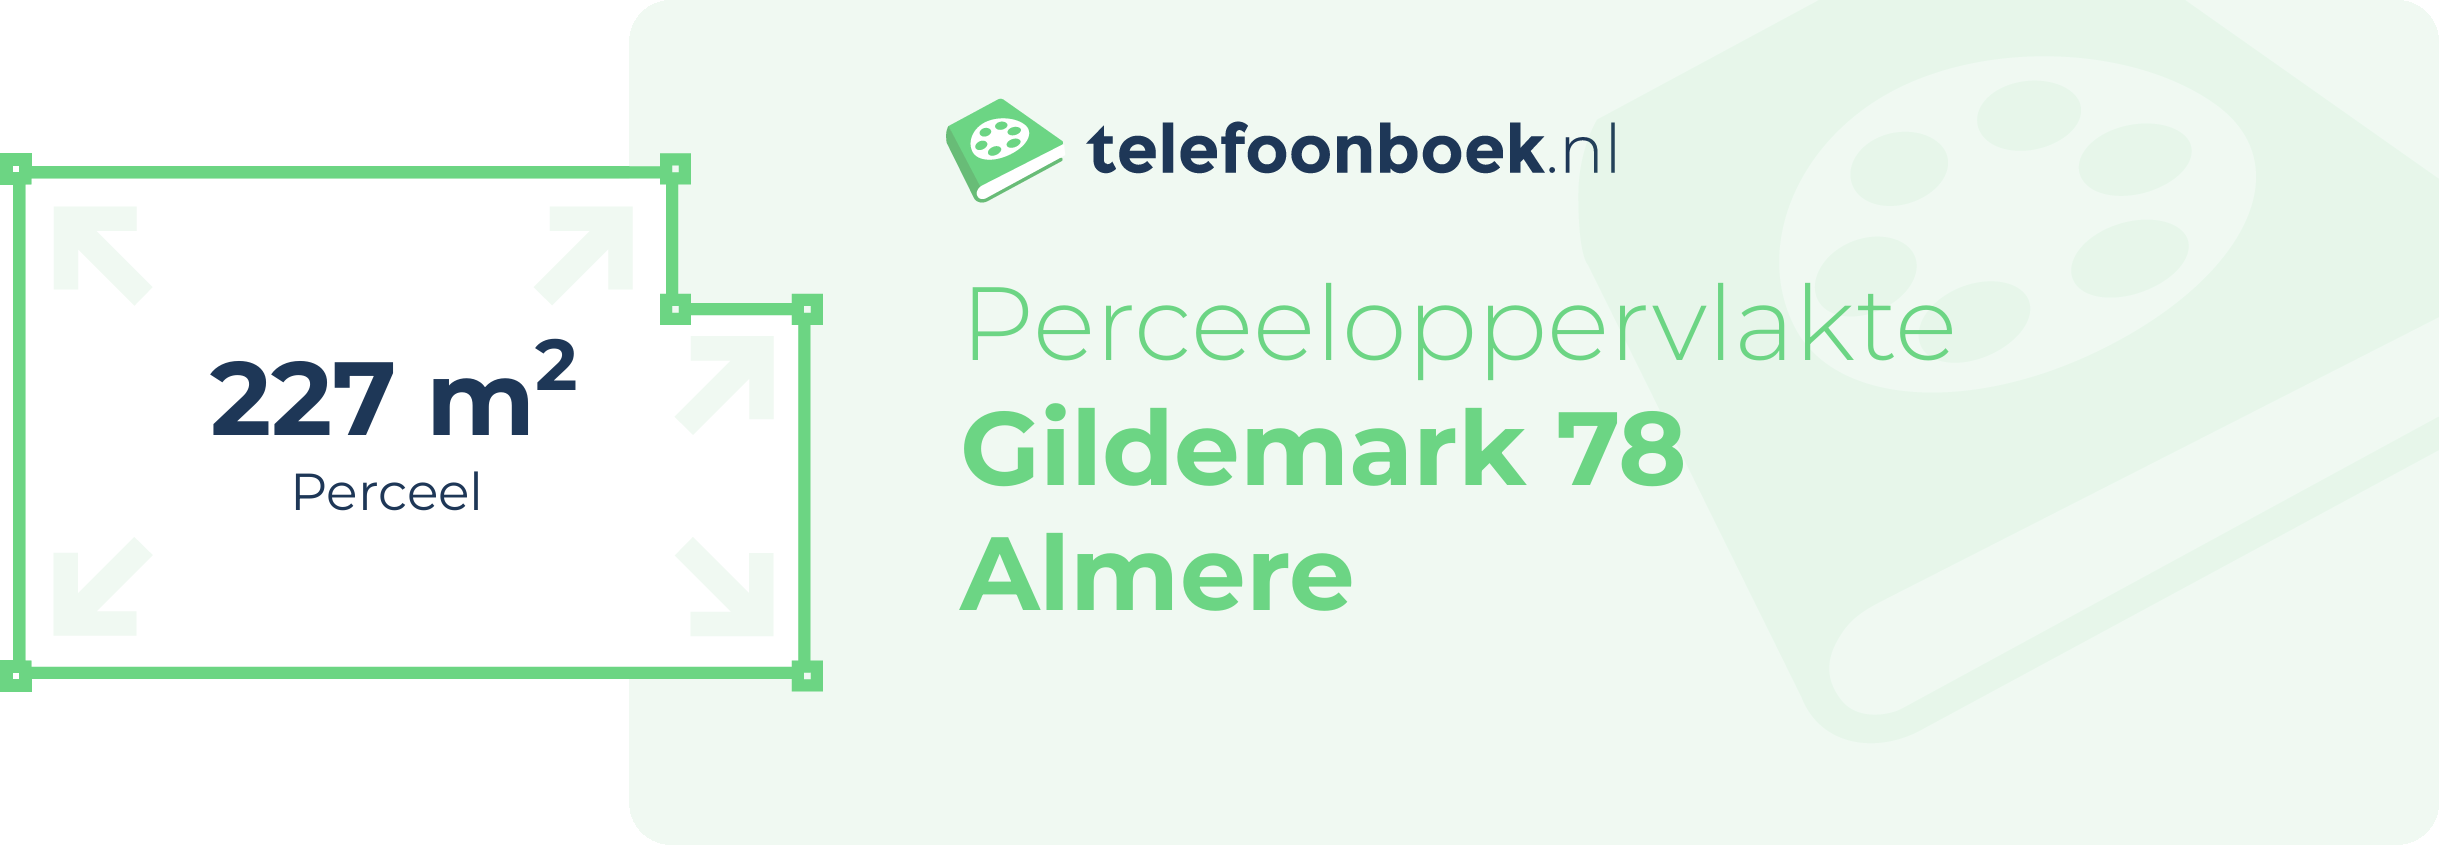 Perceeloppervlakte Gildemark 78 Almere